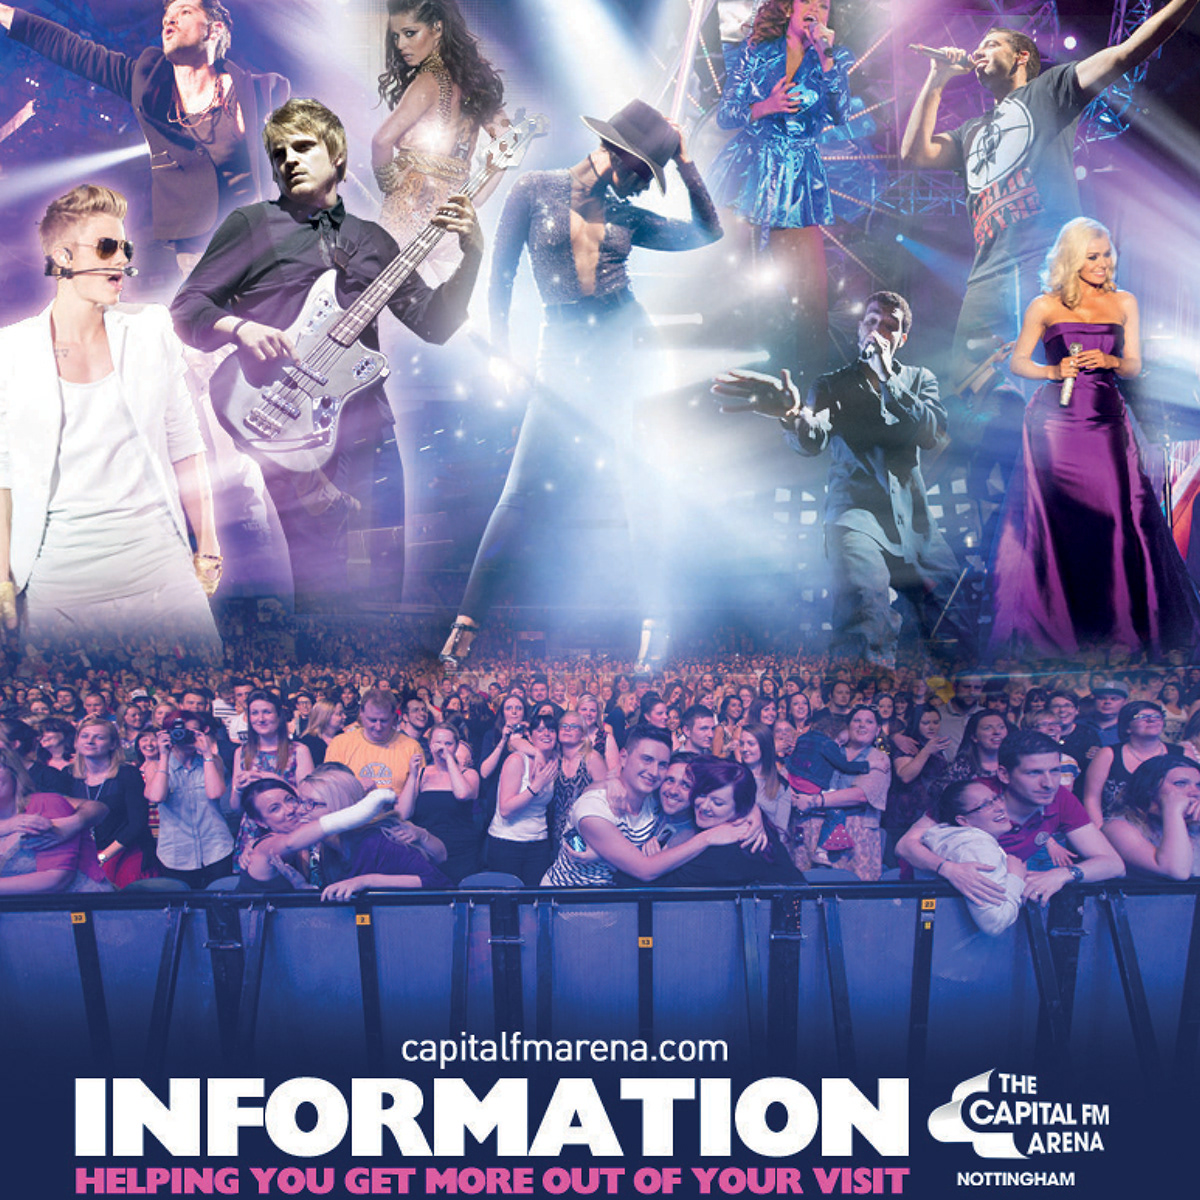 online leaflet shows information Events artist celebrities l.a.golding capitalfmarena